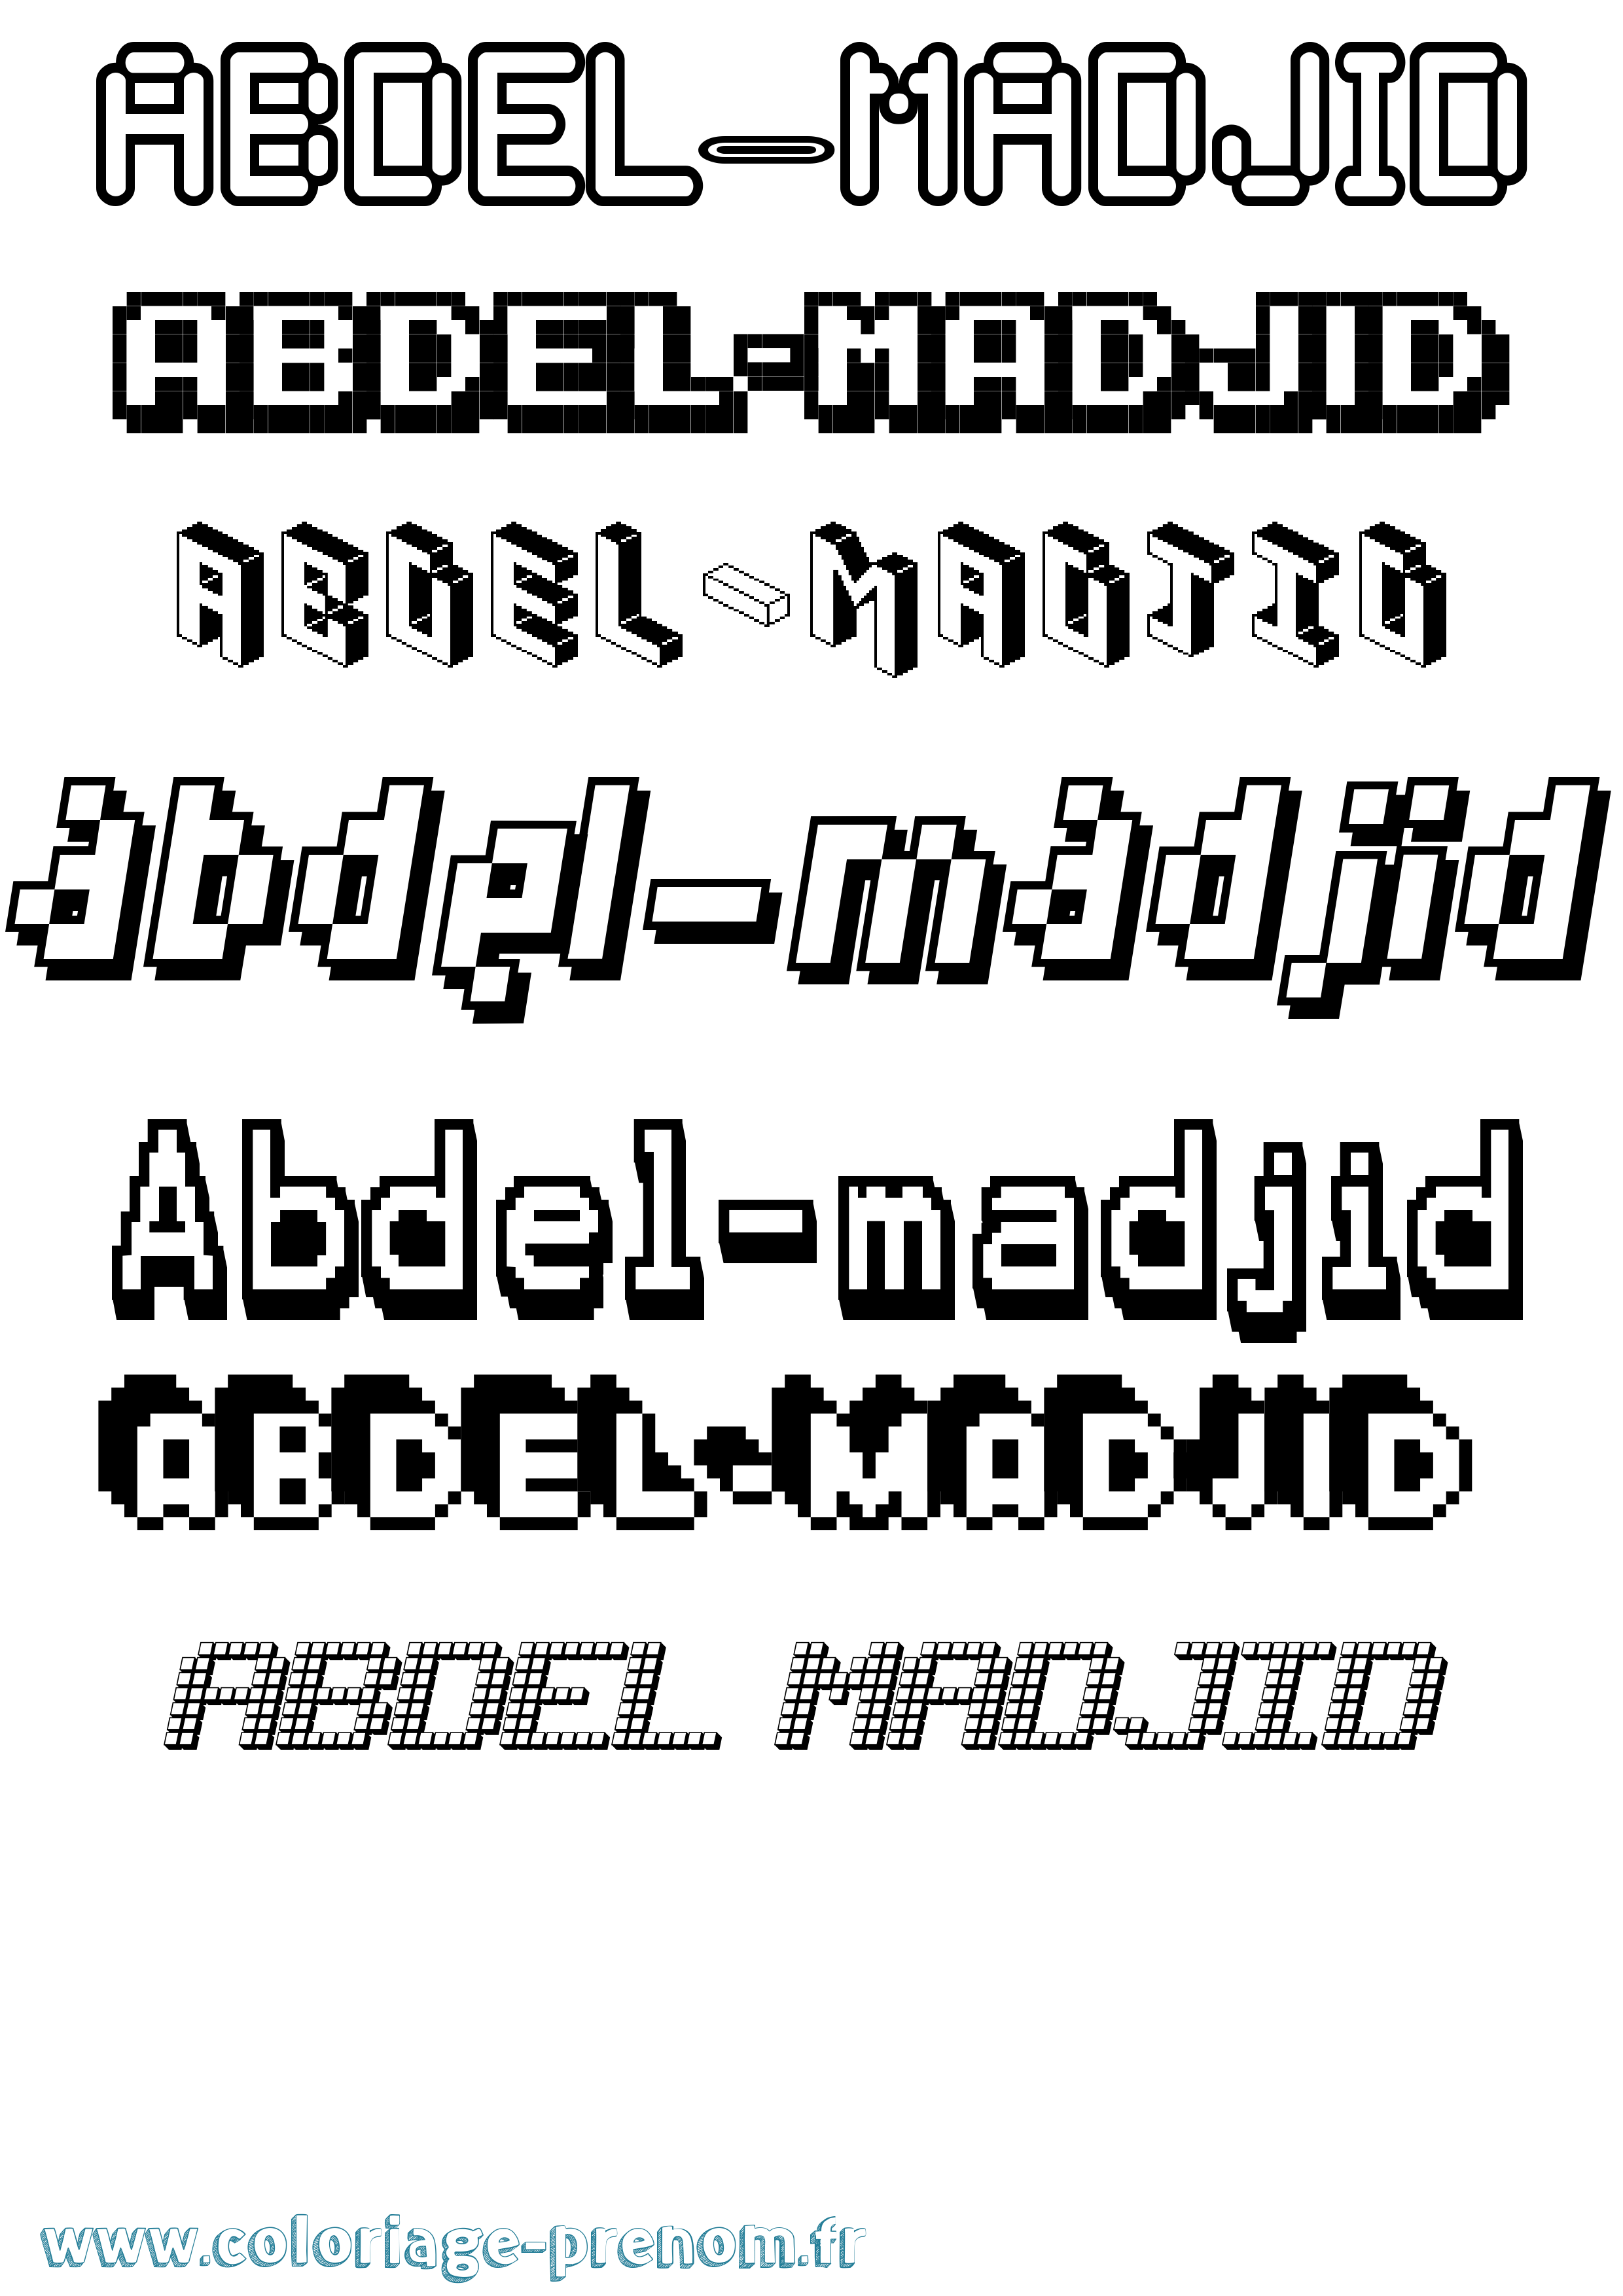 Coloriage prénom Abdel-Madjid Pixel